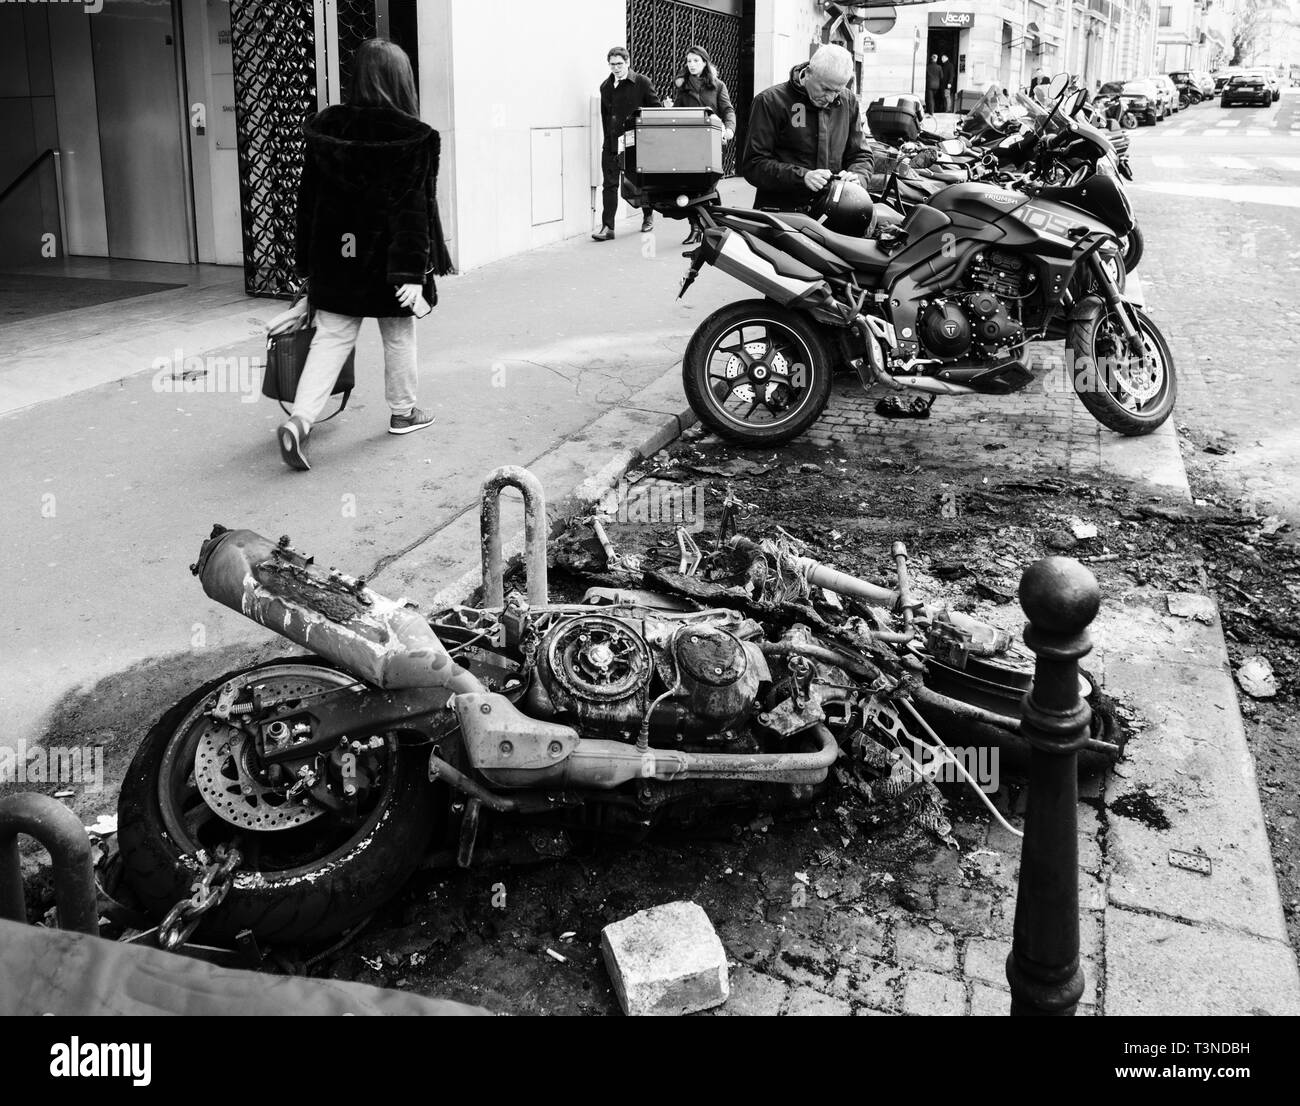 Louis Vuitton Harley Davidson motorcycle Stock Photo - Alamy